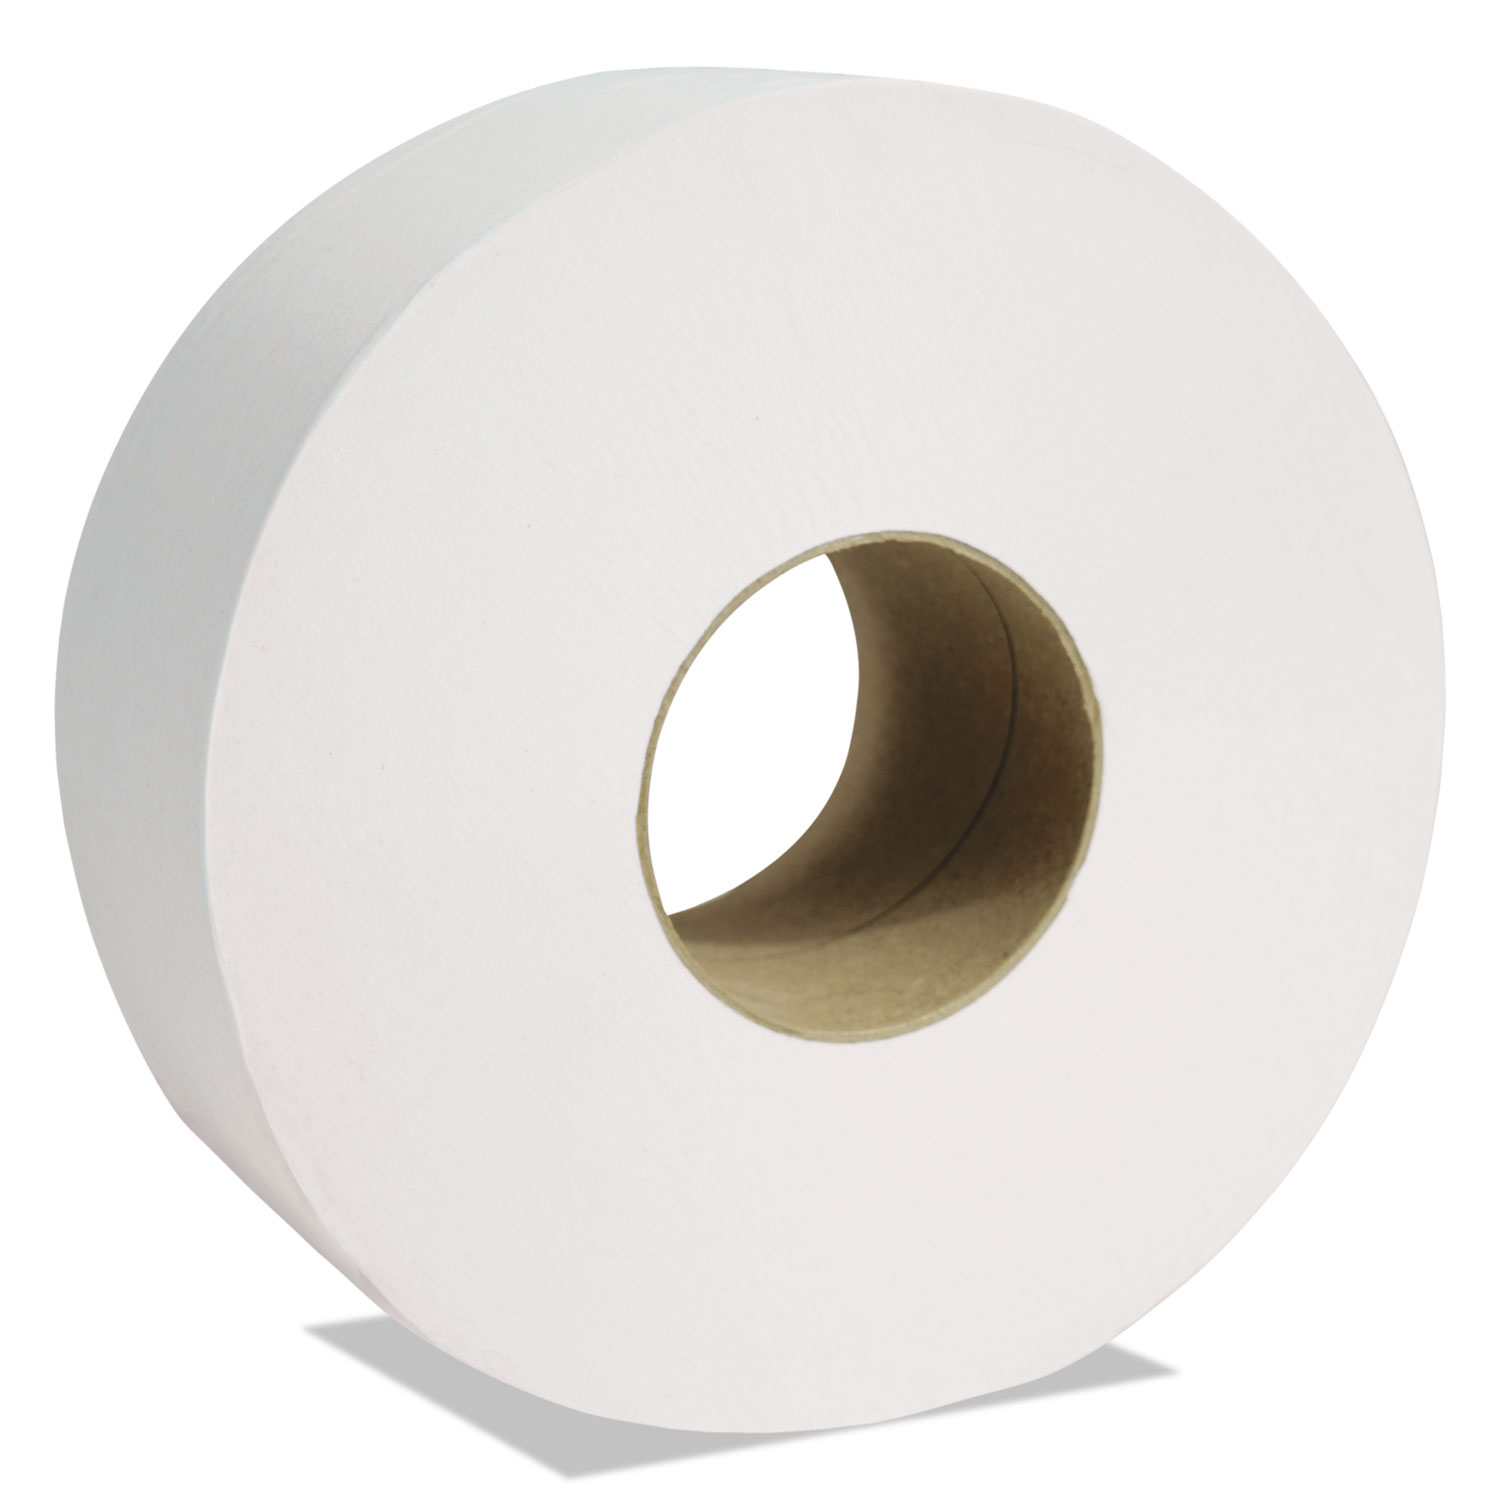 North River Jumbo Roll Tissue, 1-Ply, White, 3 1/2 x 3500 ft, 6 Rolls/Carton